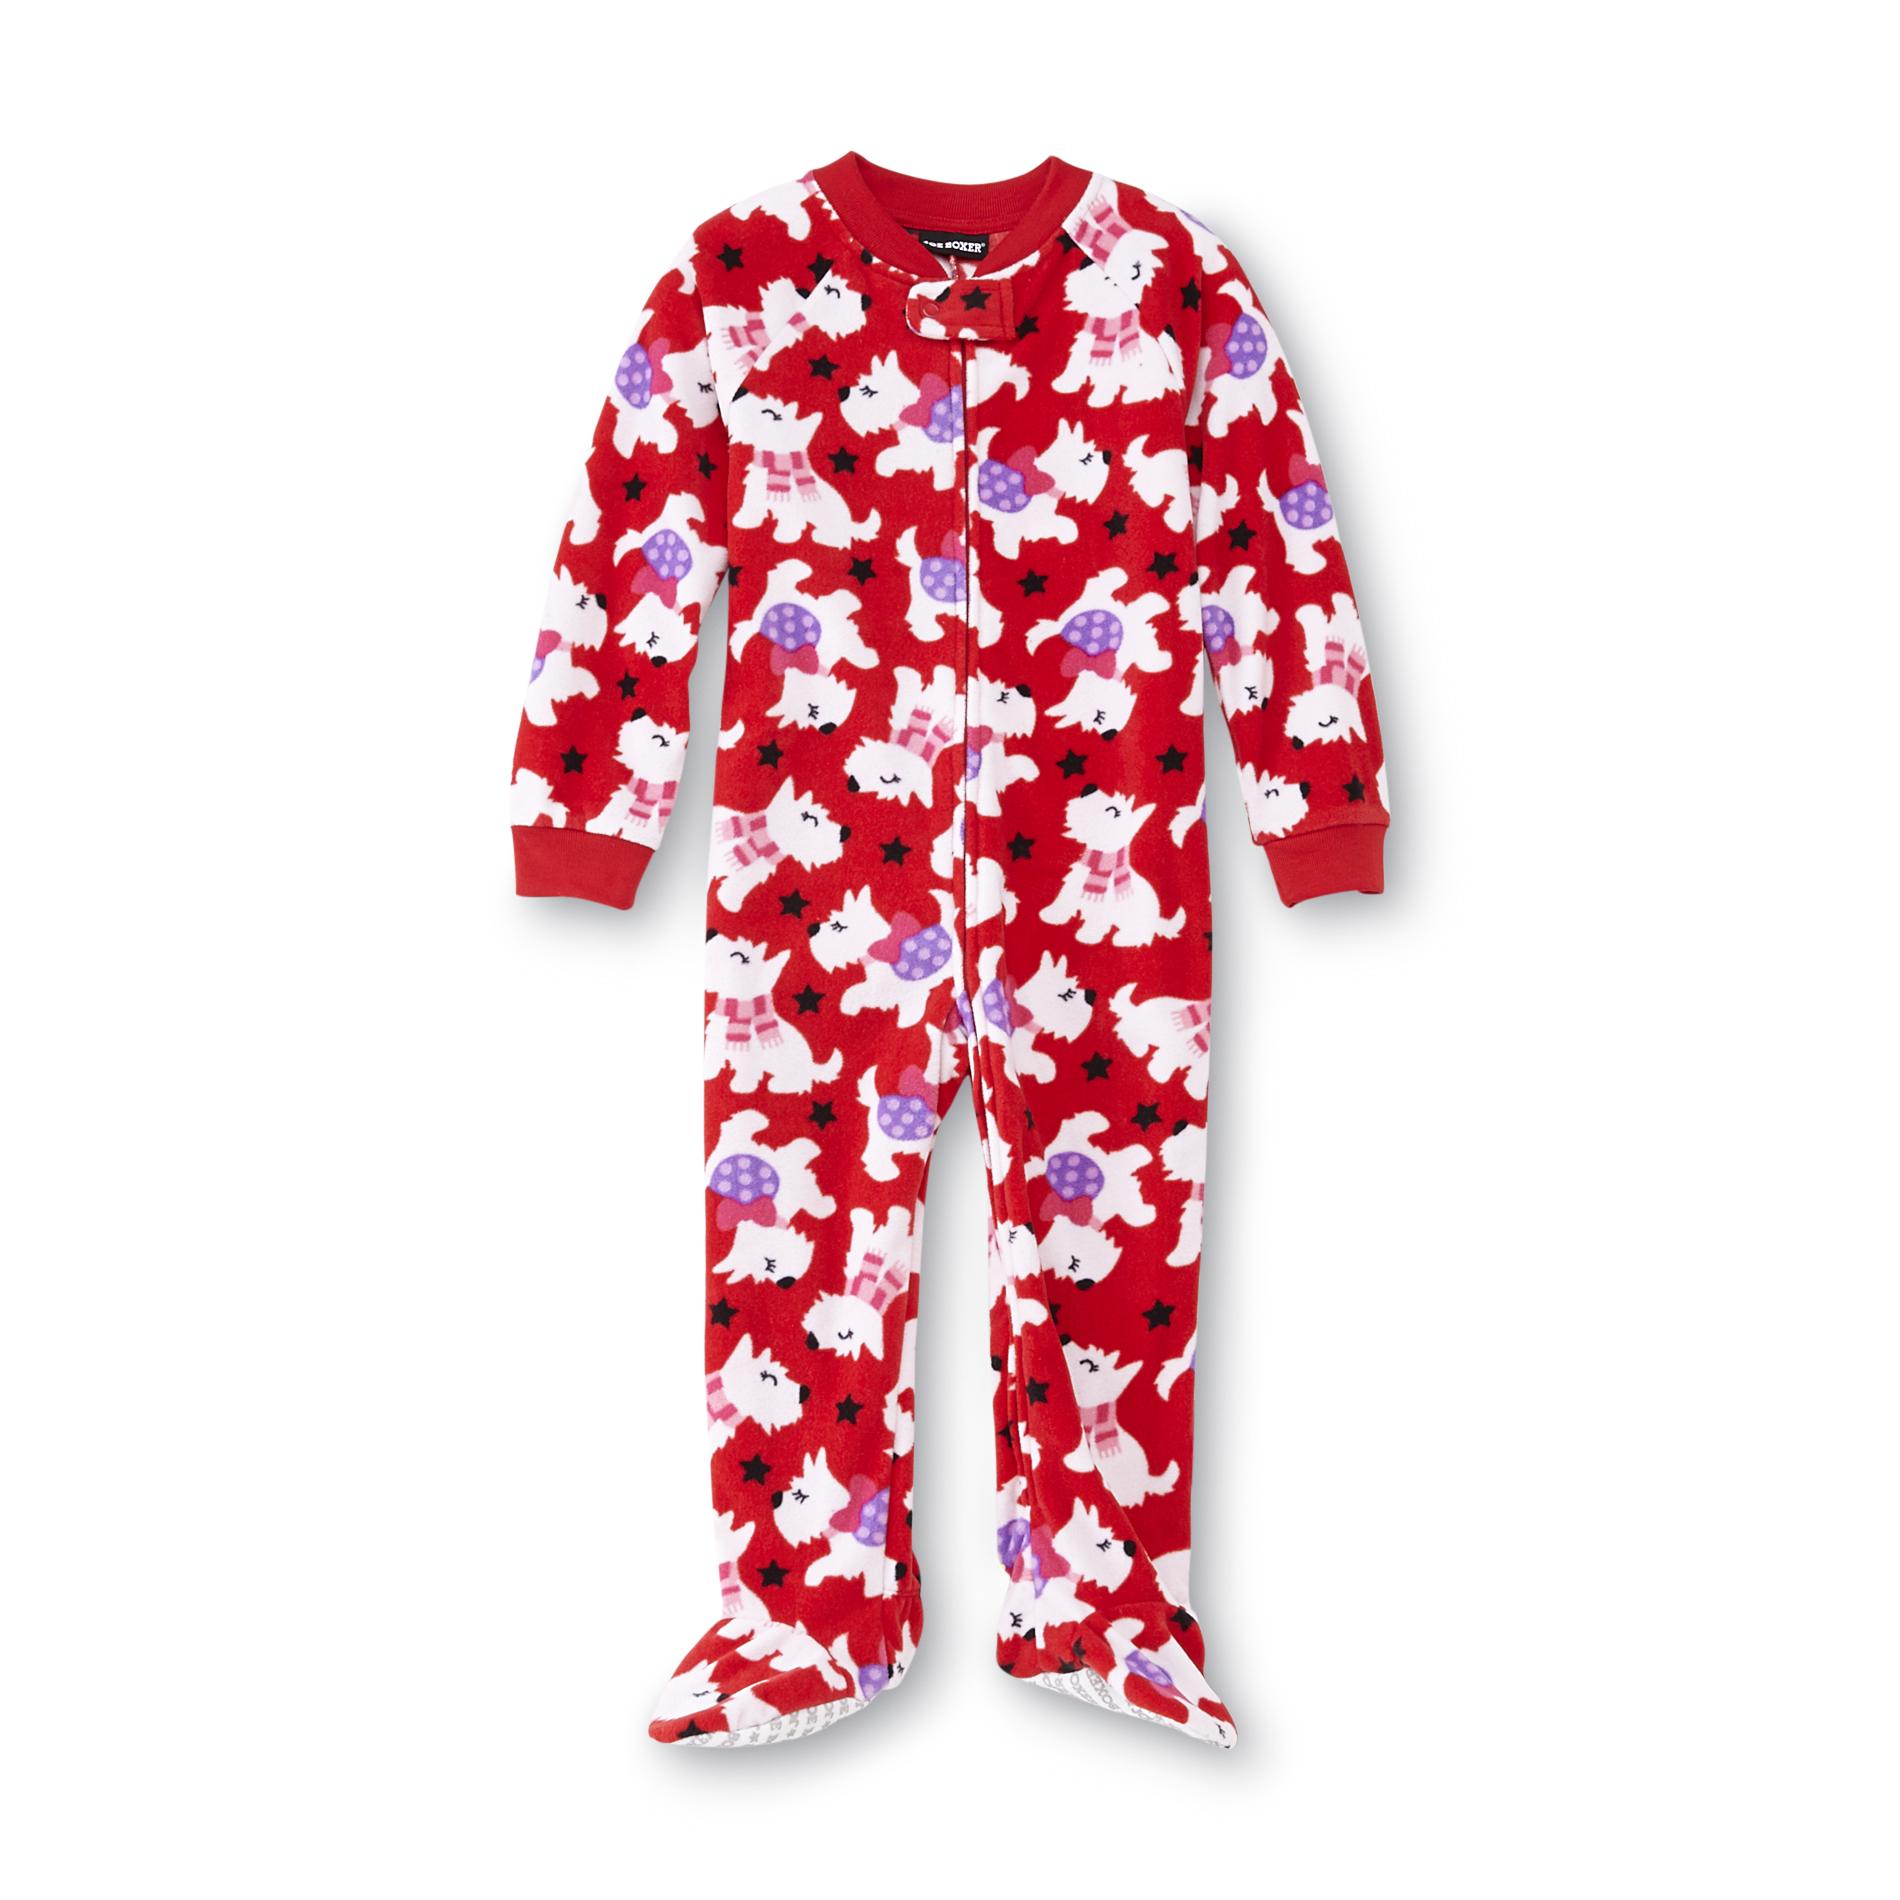 Joe Boxer Infant & Toddler Girl's Fleece Footed Pajamas - Scottie Dogs